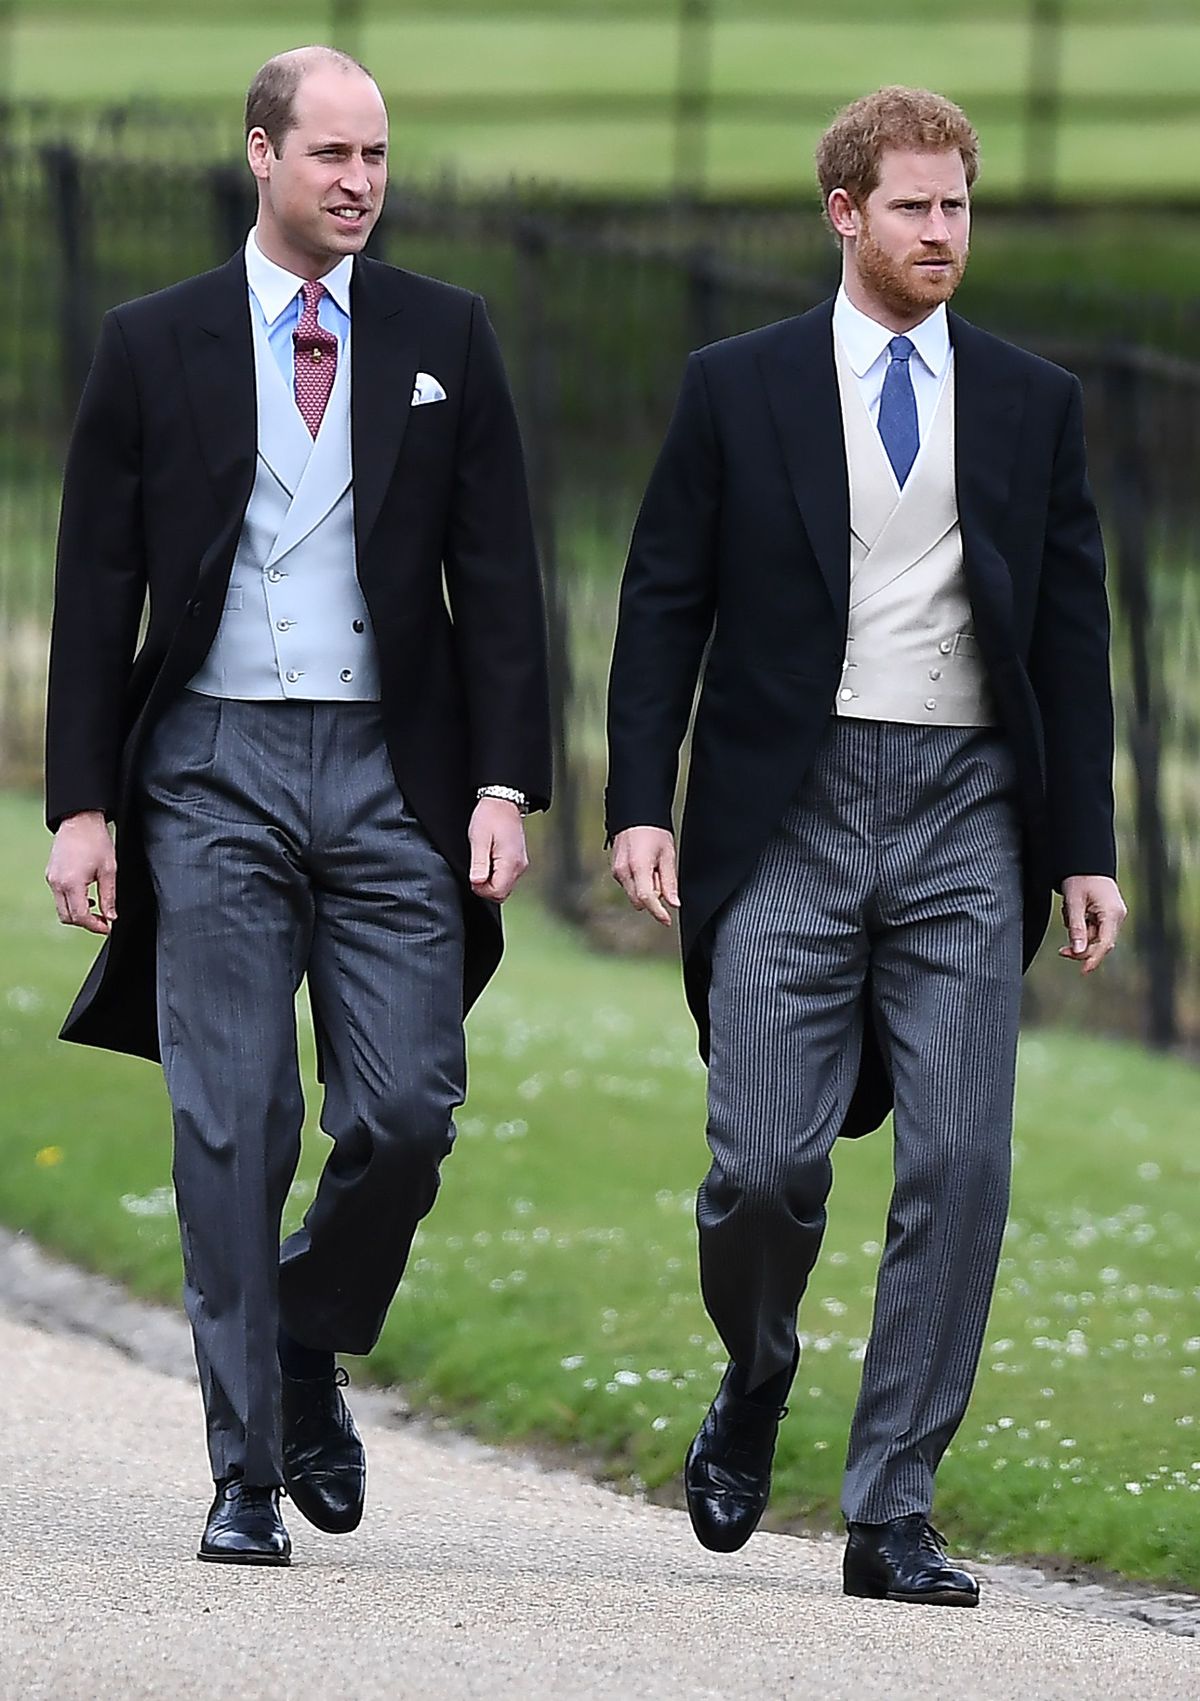 englefield green, Inglismaa 20. britains prints Harry r ja britains prints William, Cambridge